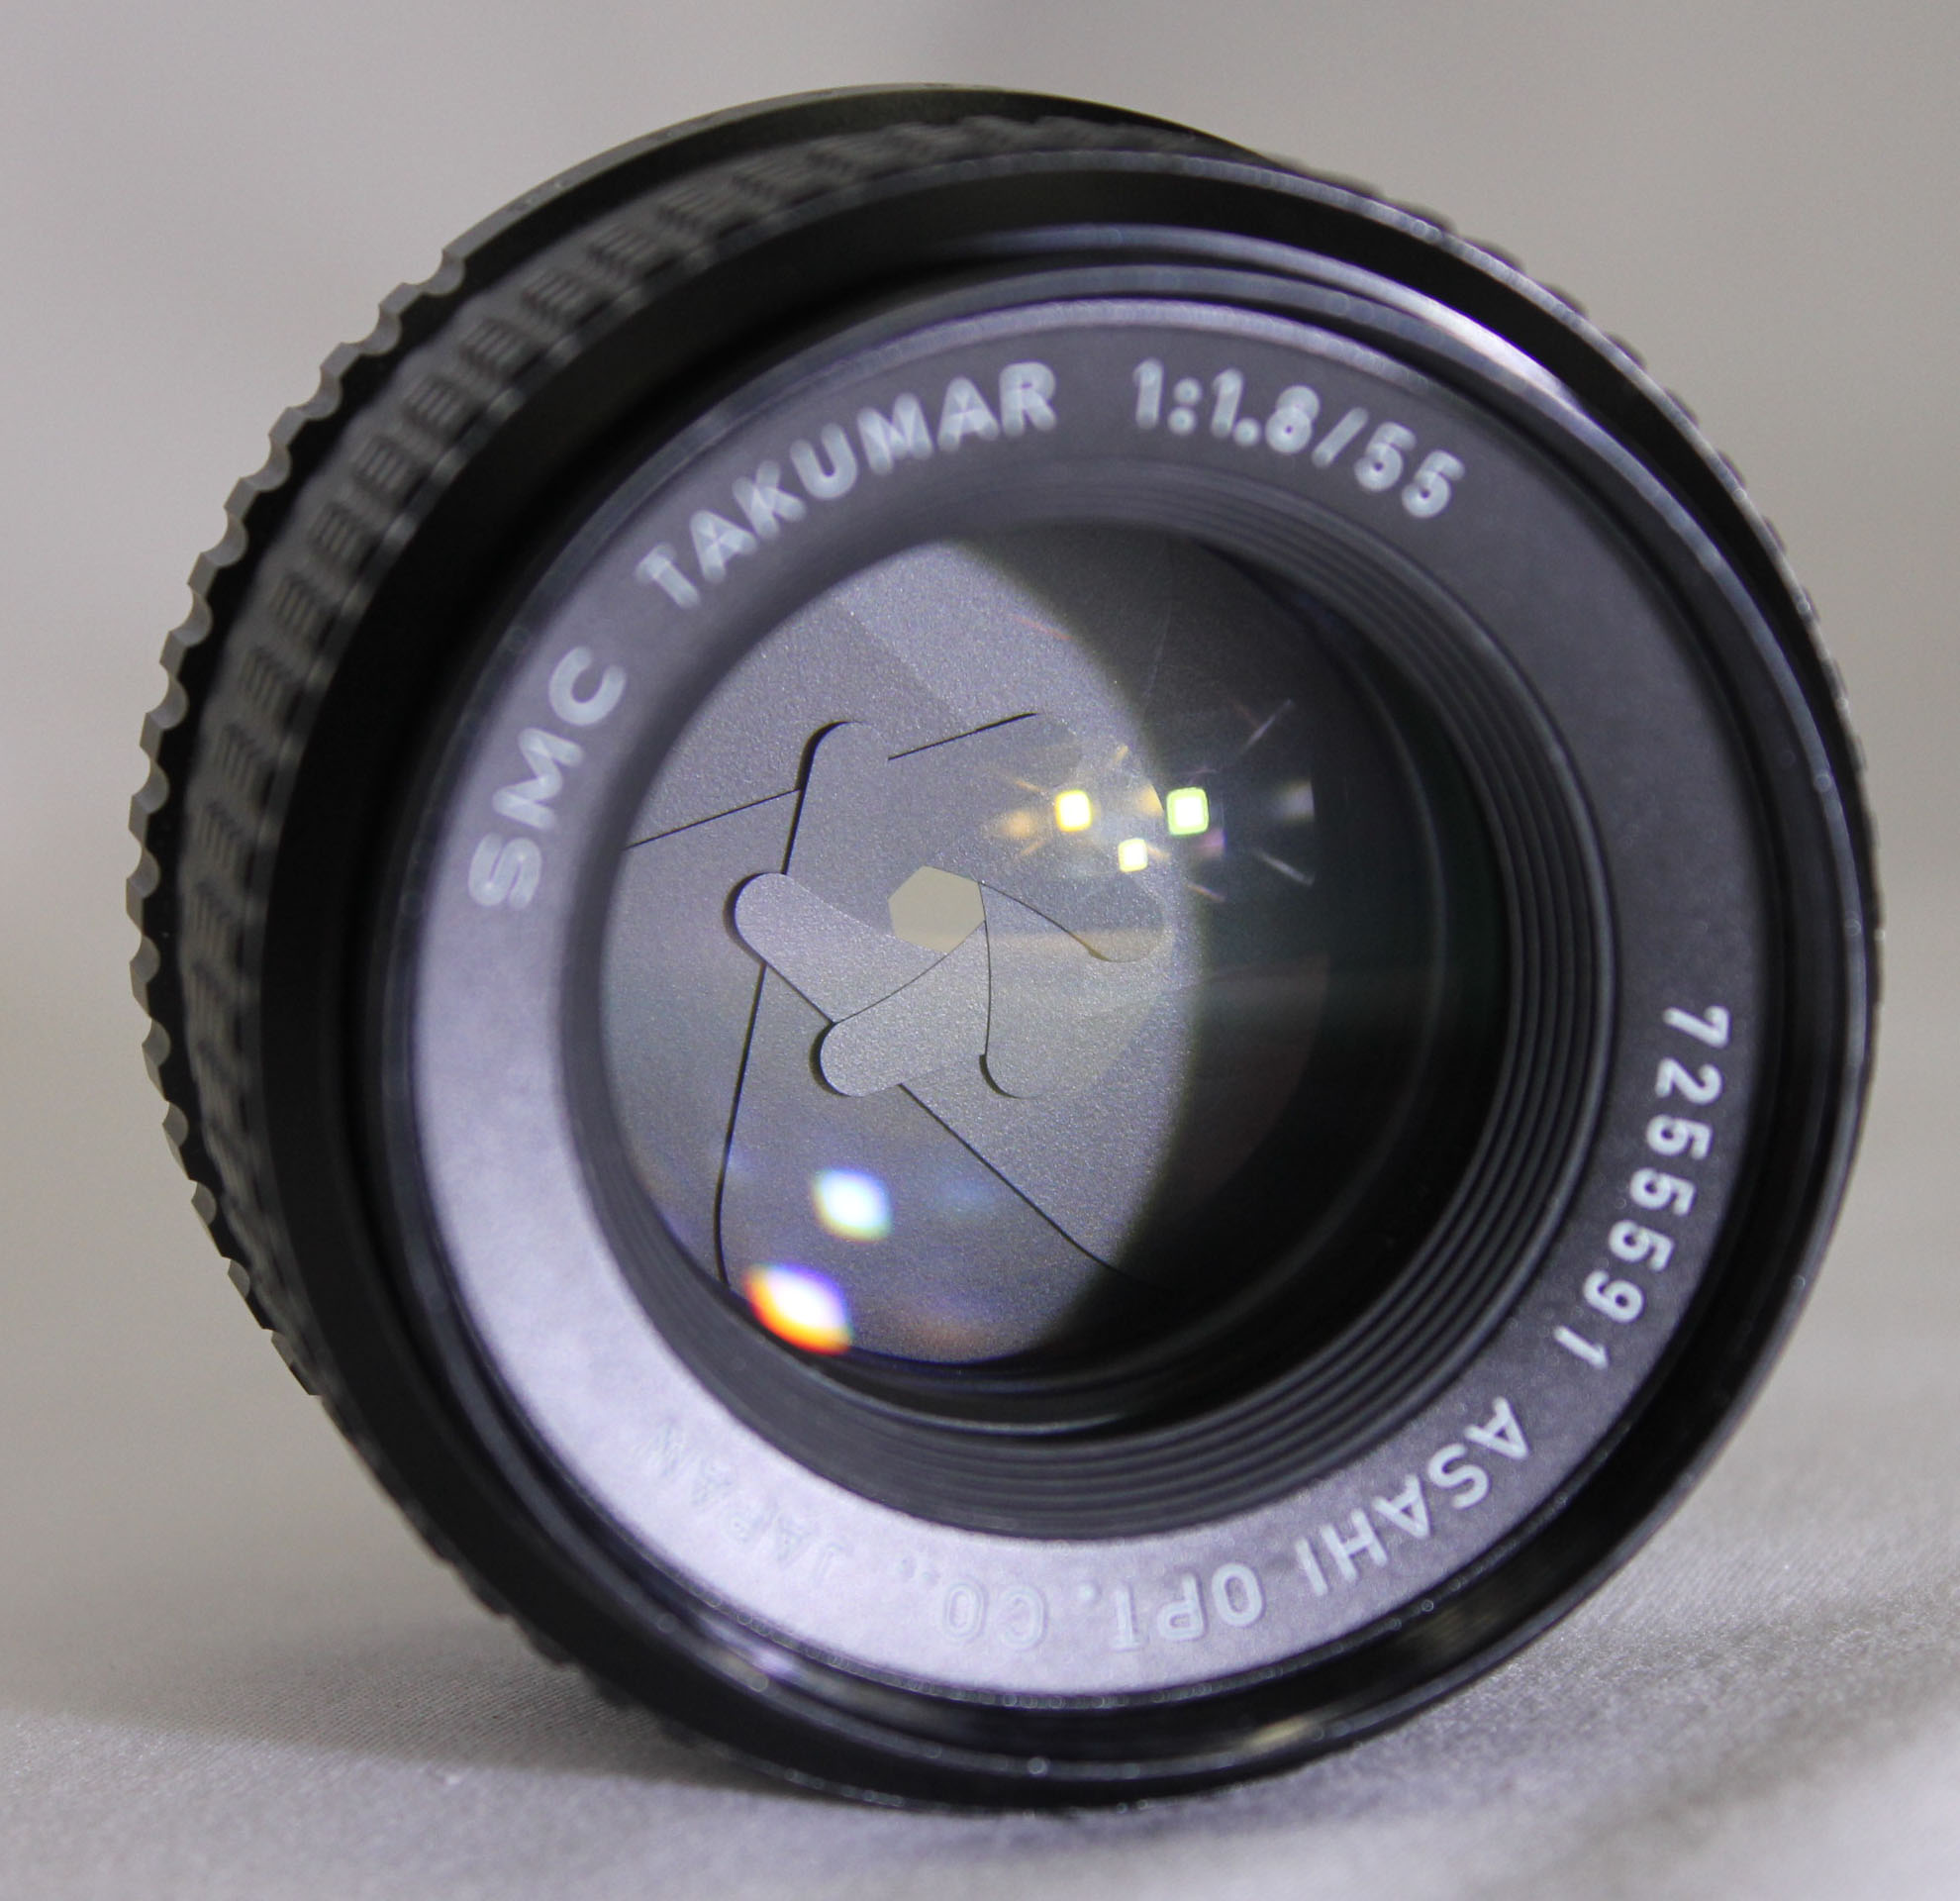 Asahi Pentax Spotmatic F SPF 35mm SLR Camera w/ SMC Takumar 55mm F/1.8 Lens from Japan Photo 18